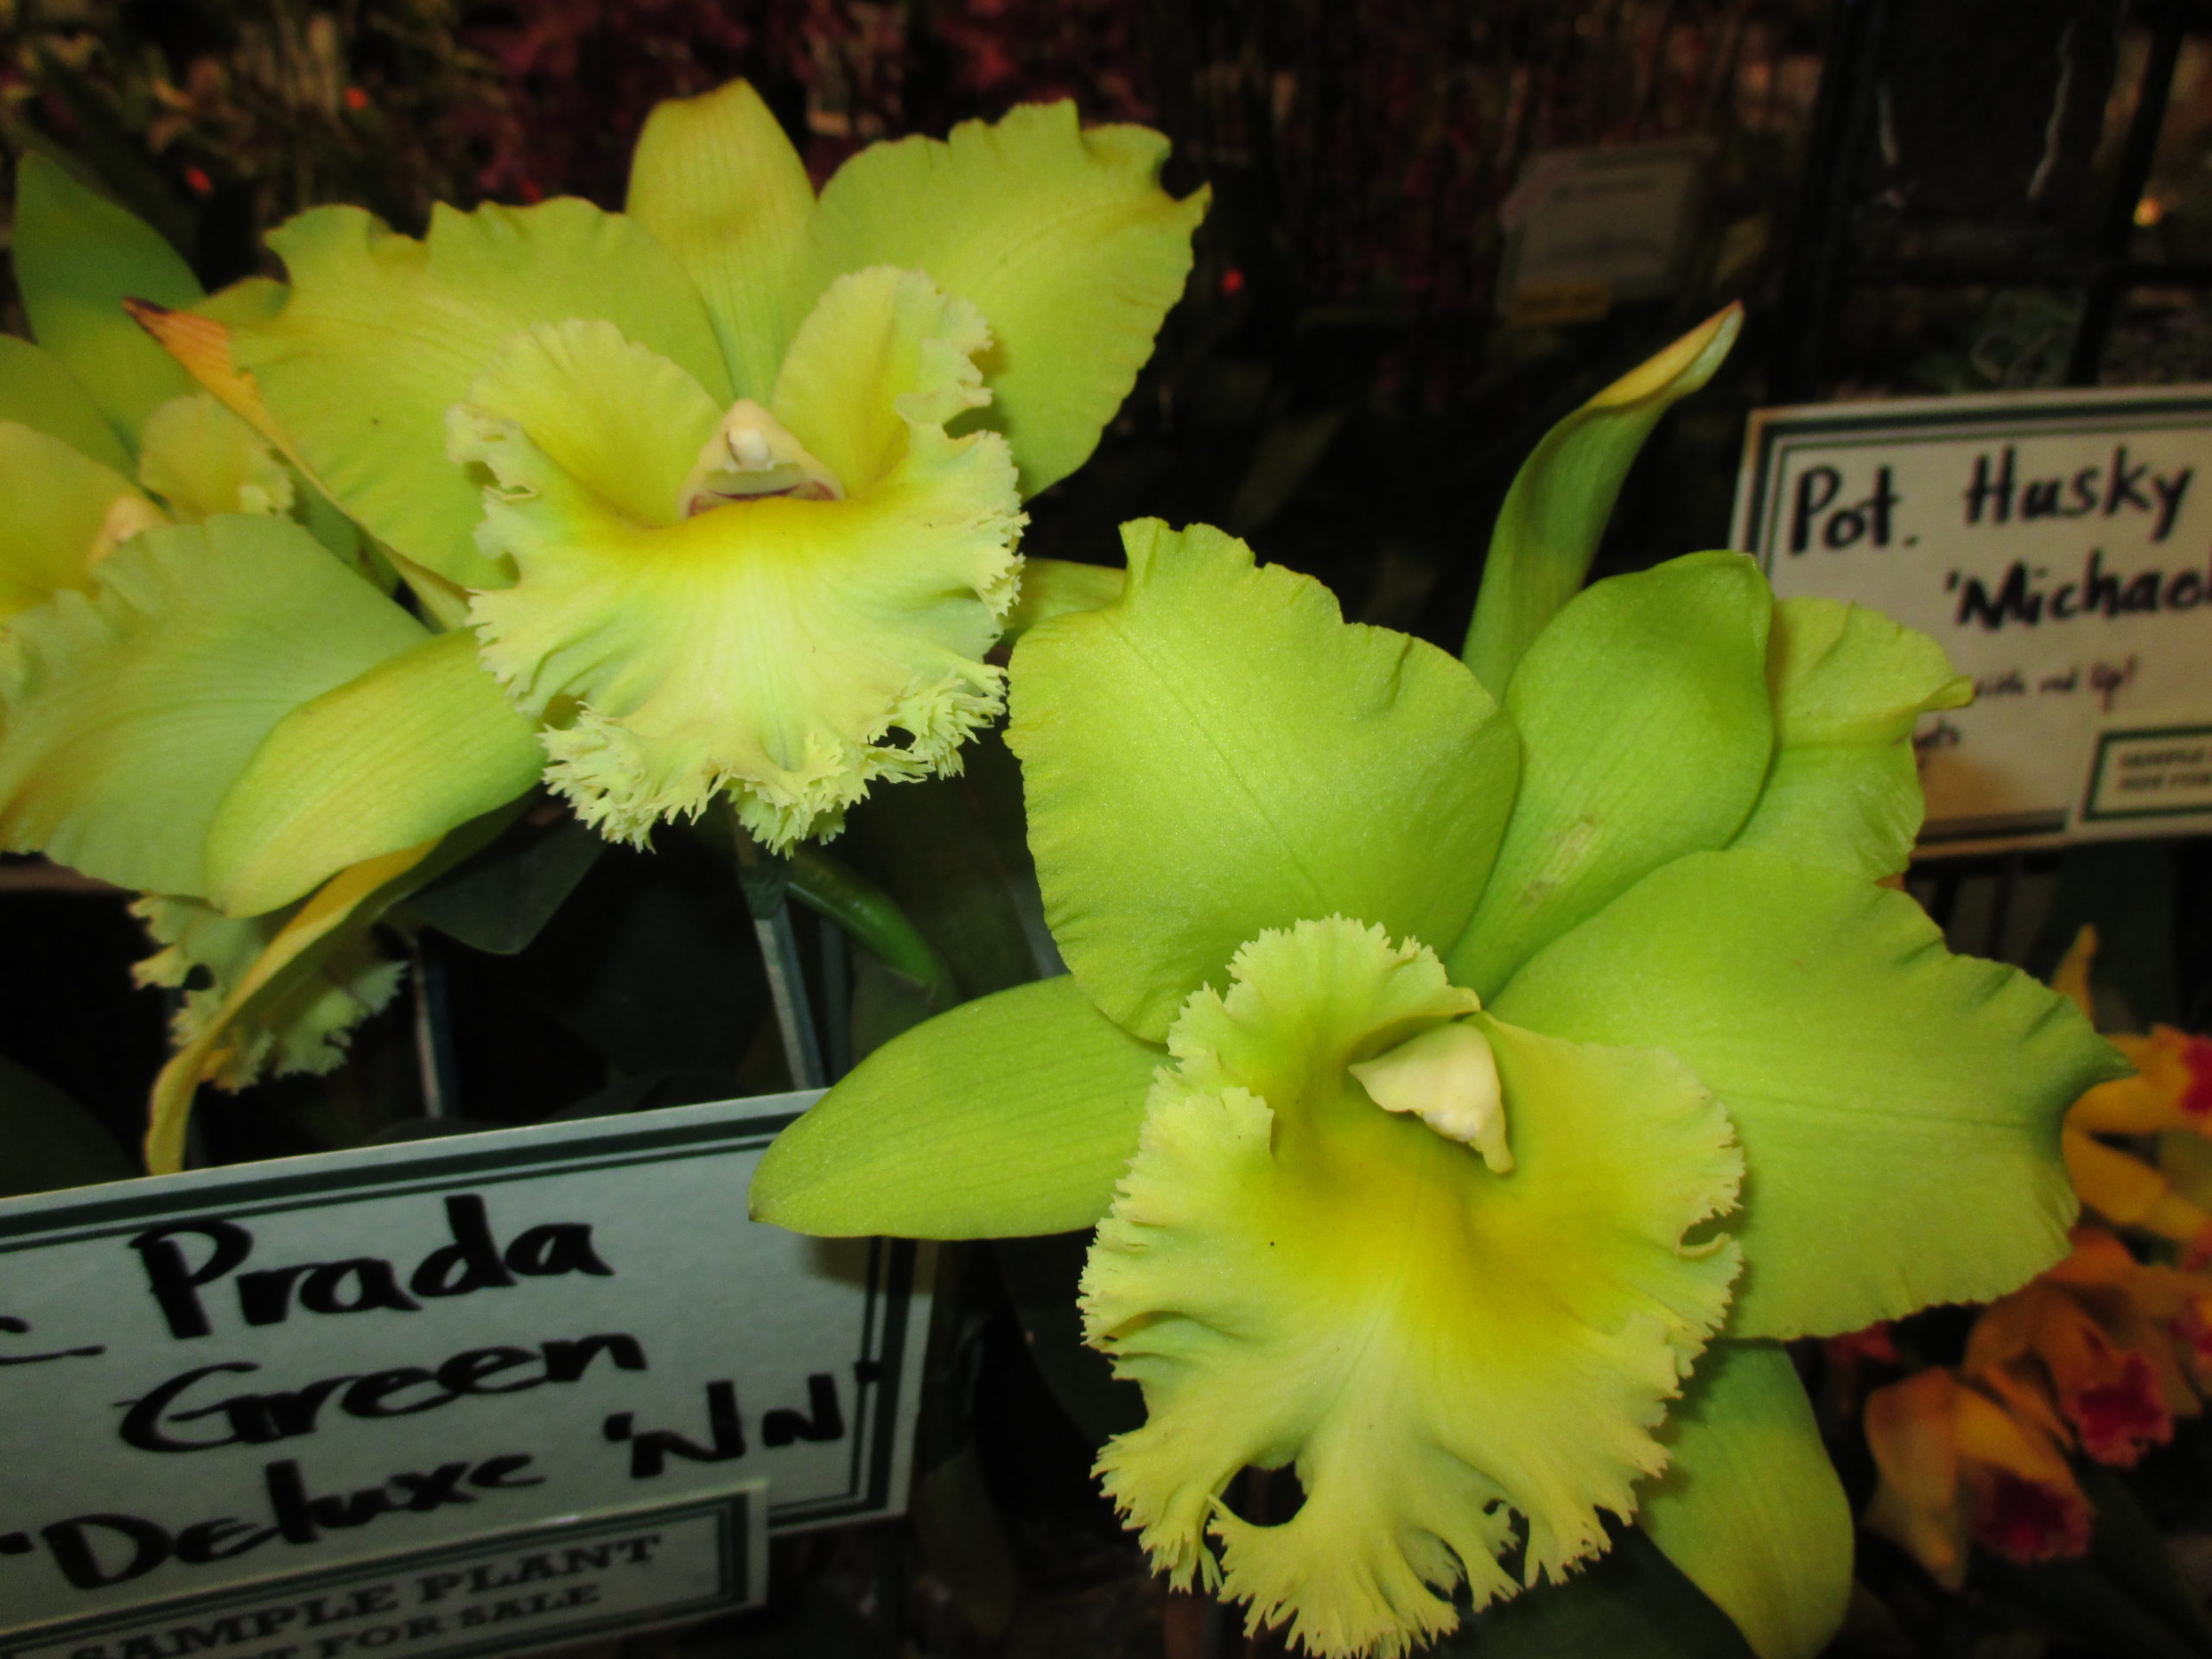 T-5146 Blc. Prada Green Deluxe 'NN' (25 plugs) - Carmela Orchids Inc